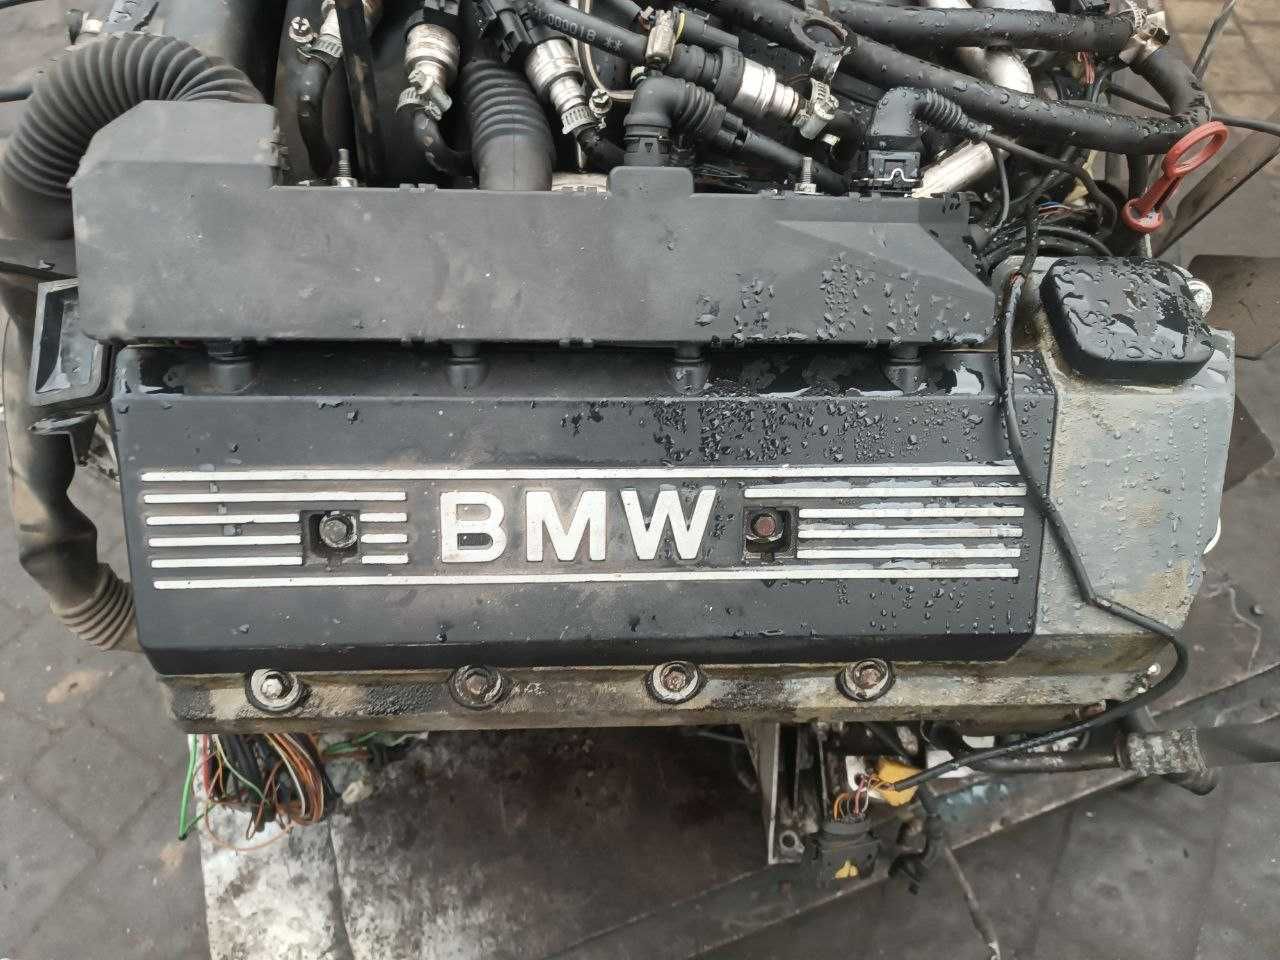 Мотор двигун двигатель голий взборі е39 е38 Bmw e39 e46